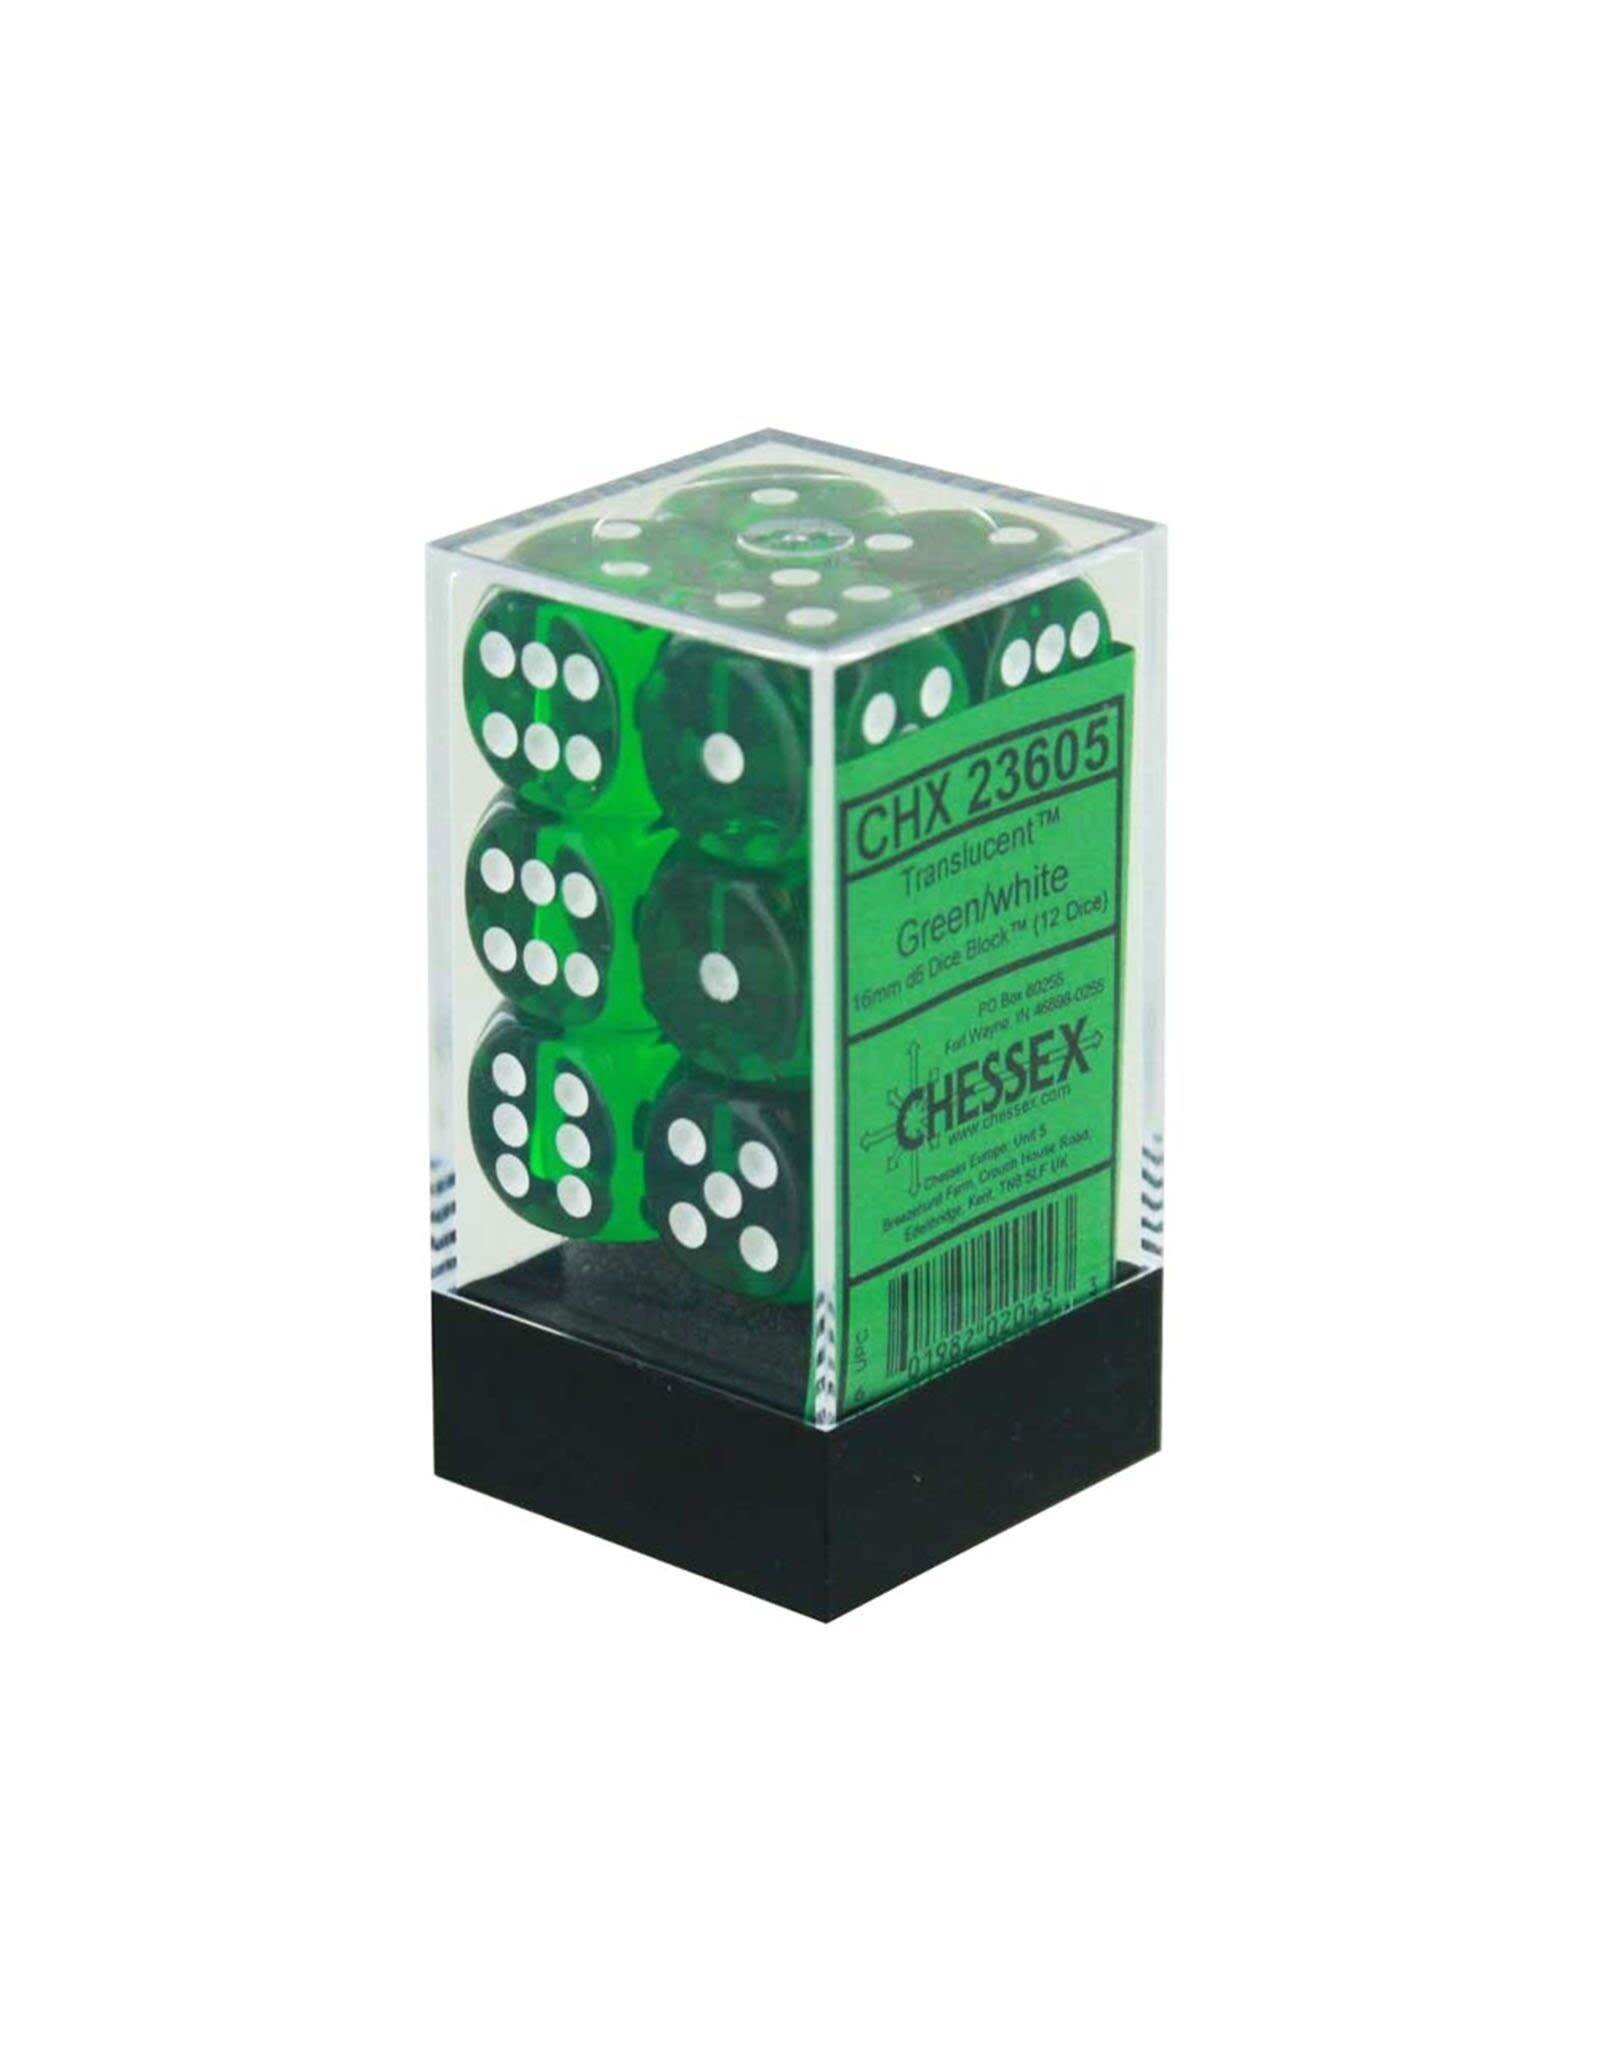 Chessex Green/white Translucent 16mm D6 dice set